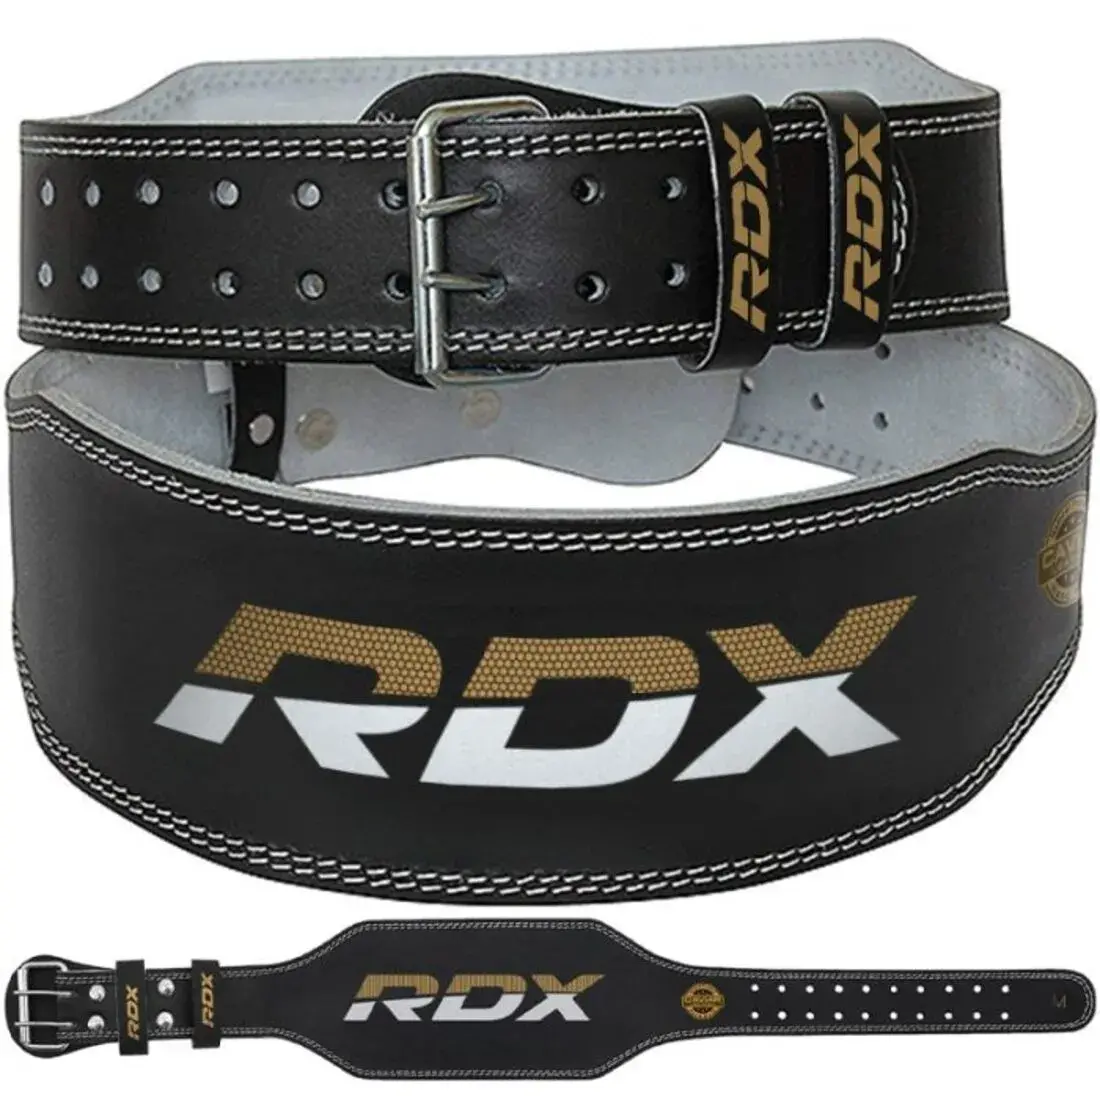 leather rdx belt